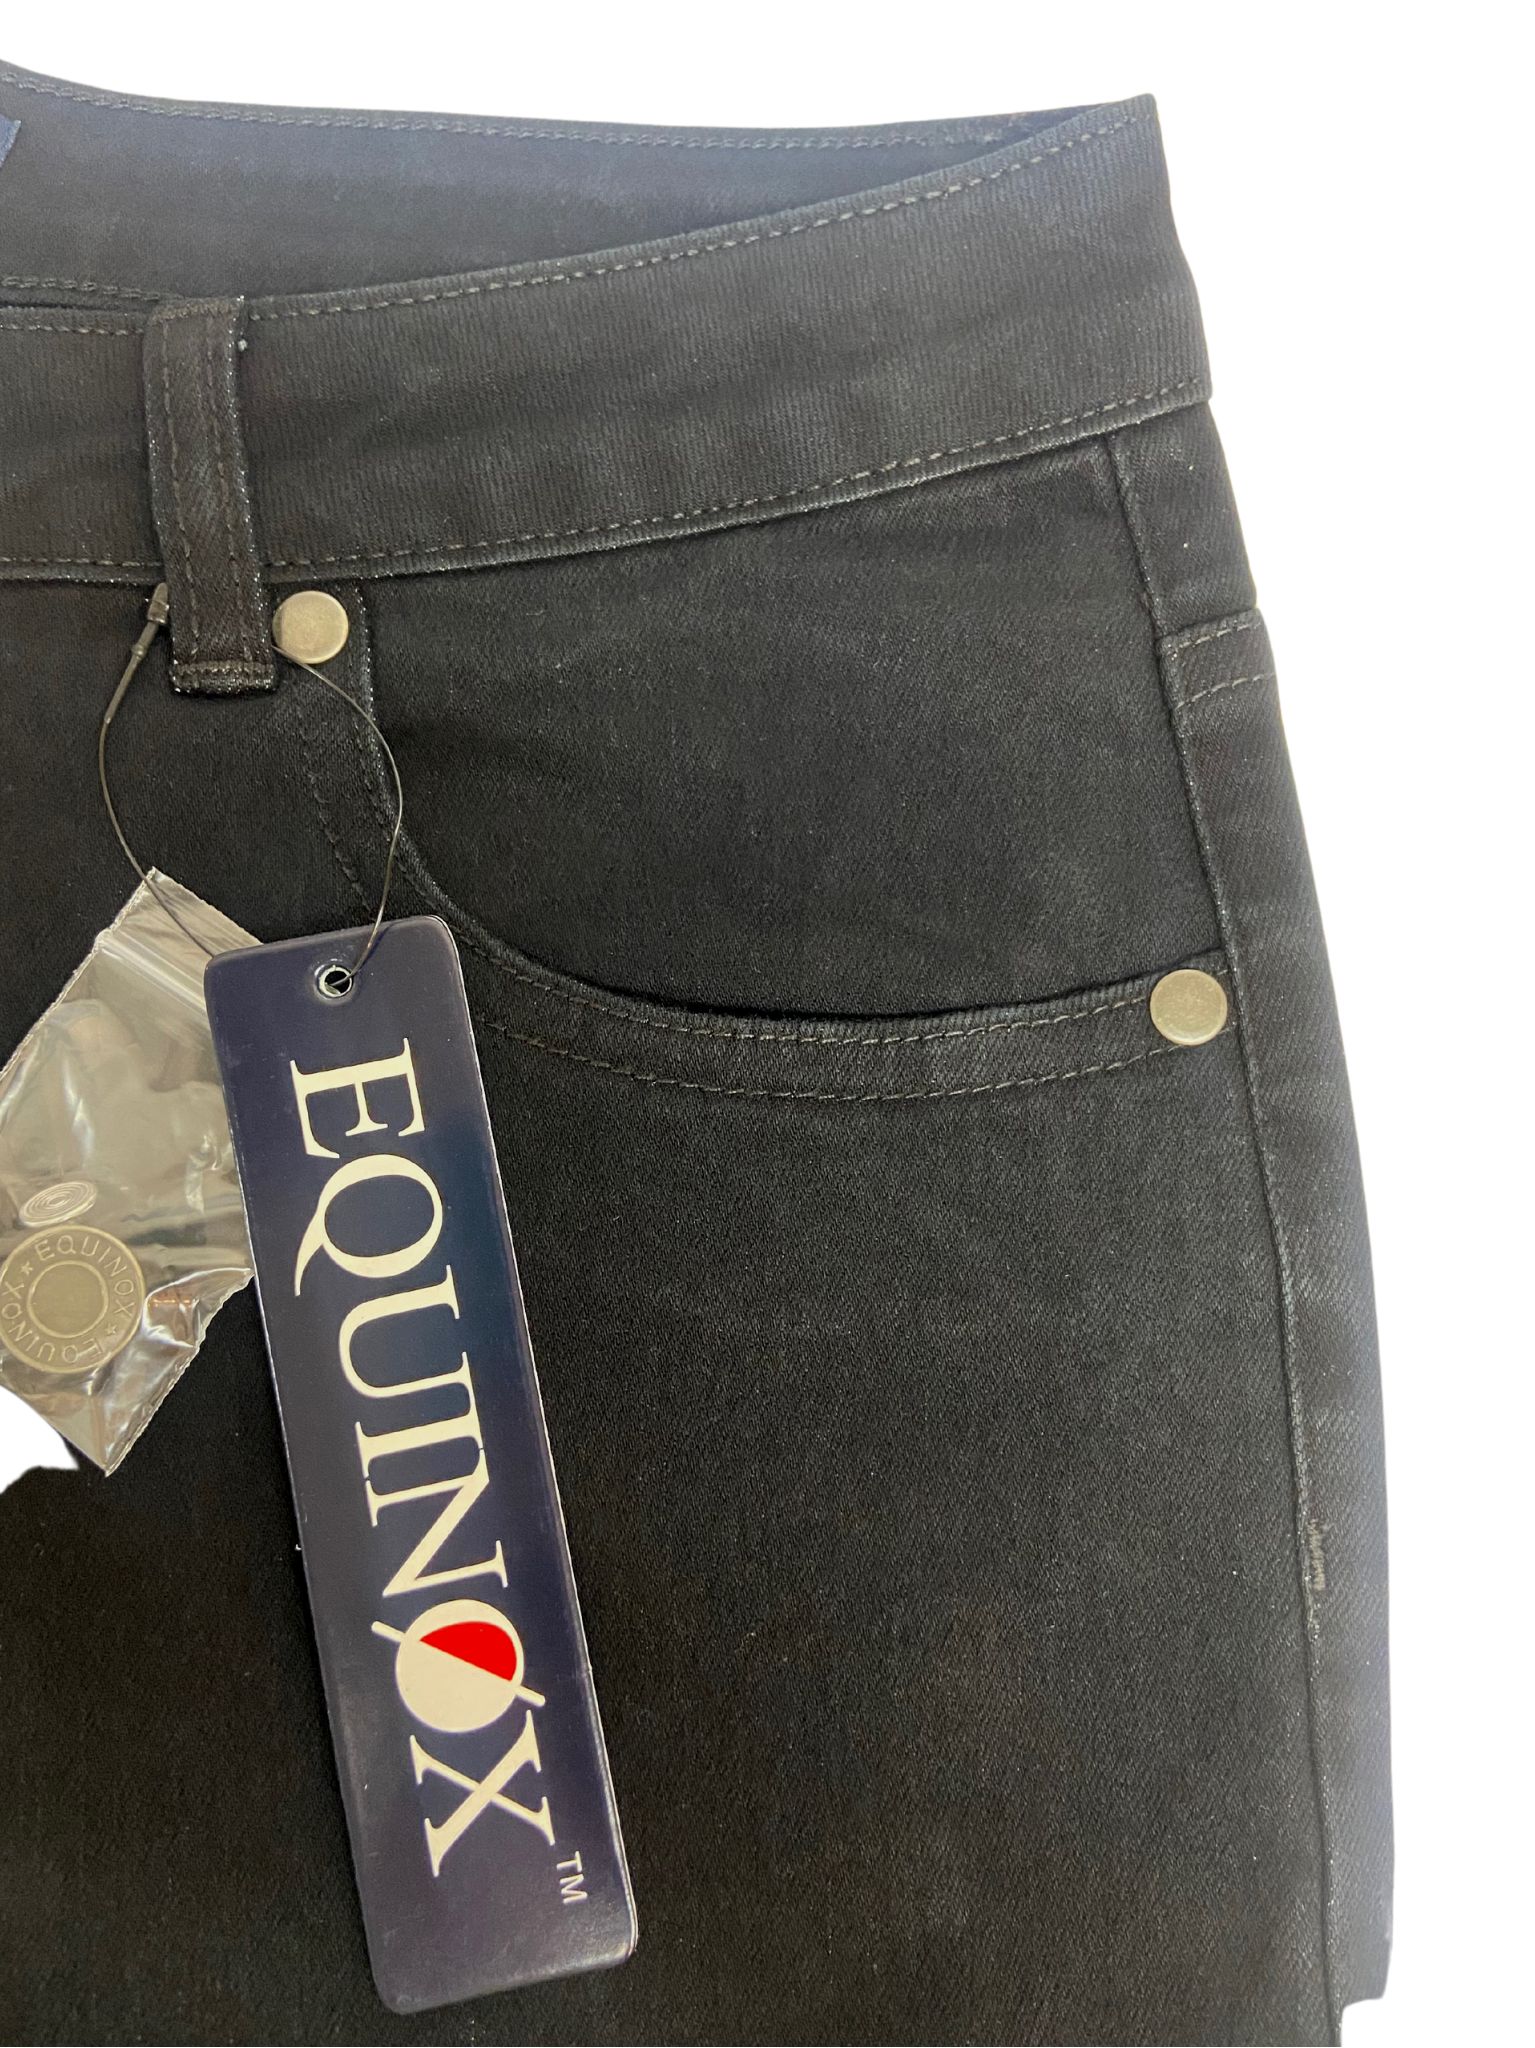 Equinox Clothing Women's Black stretch denim 5 pocket jean